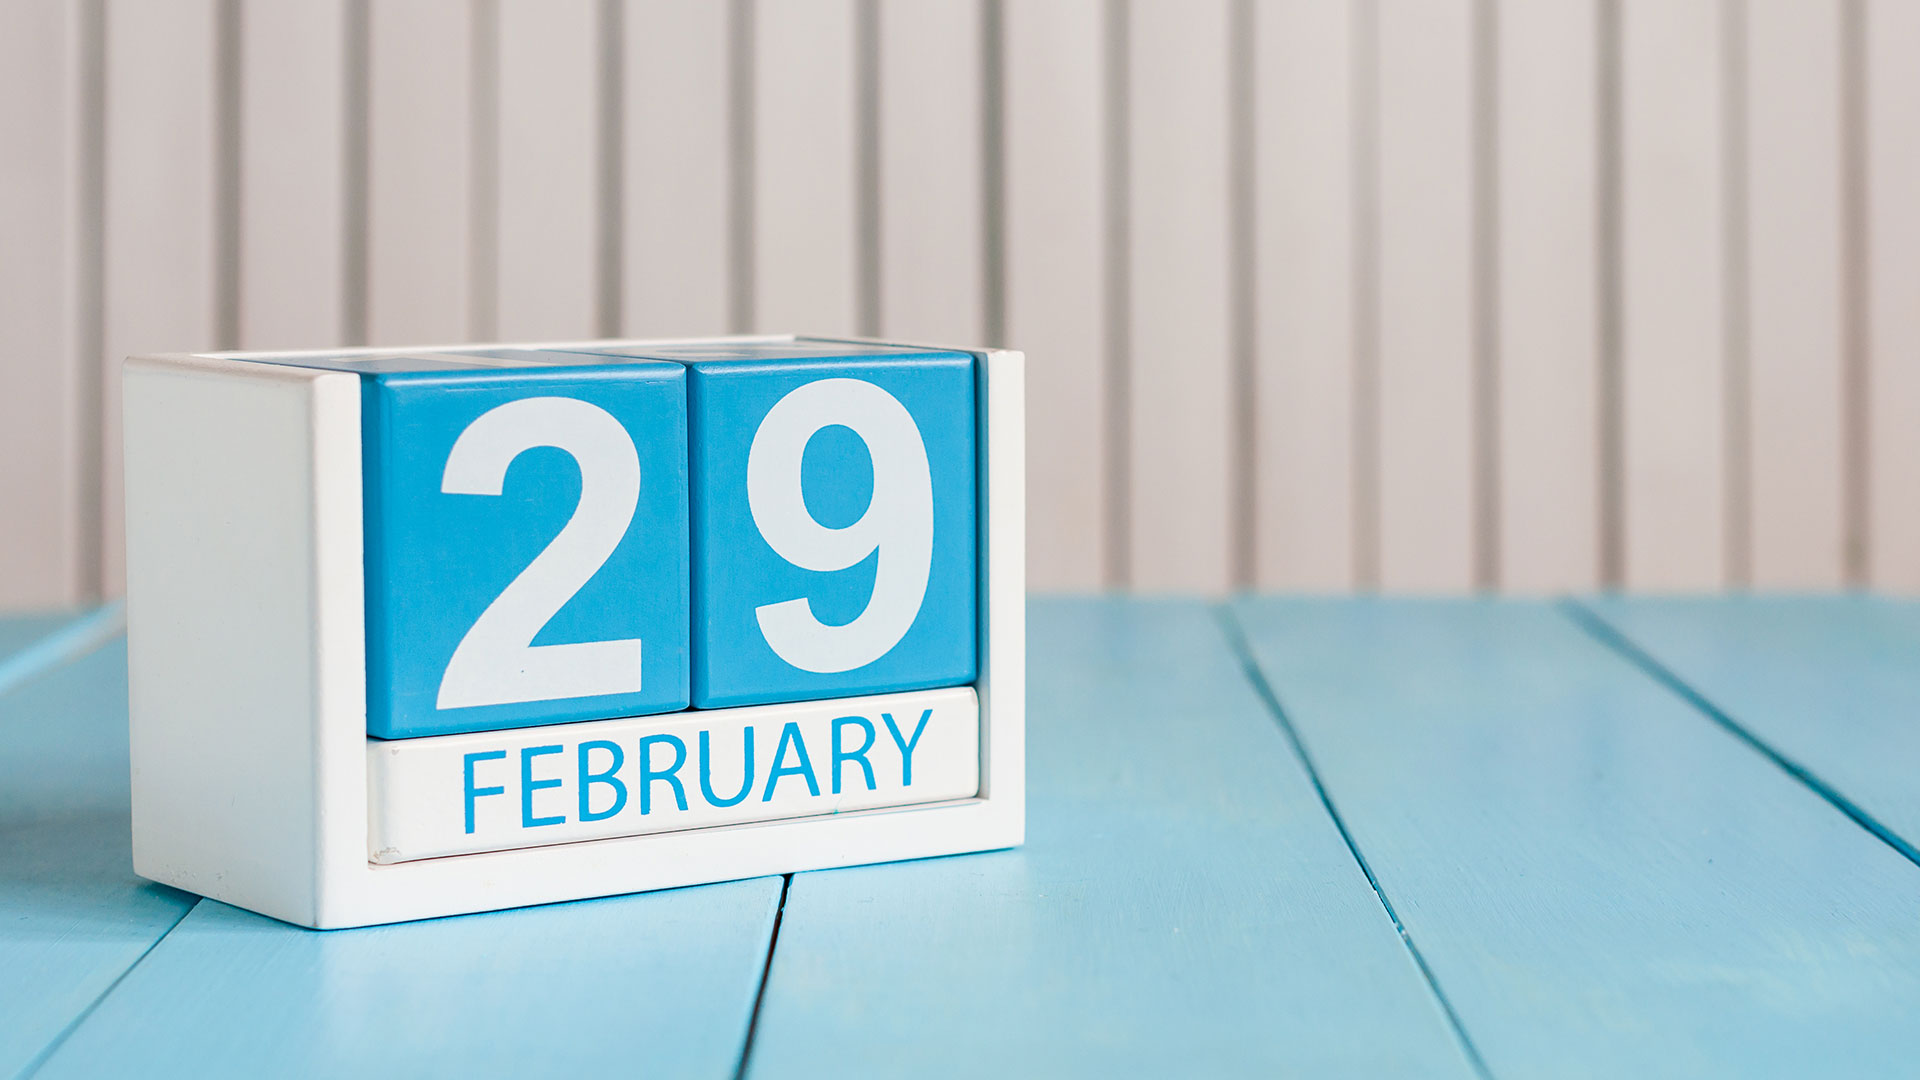 Wooden block calendar displaying 29 February